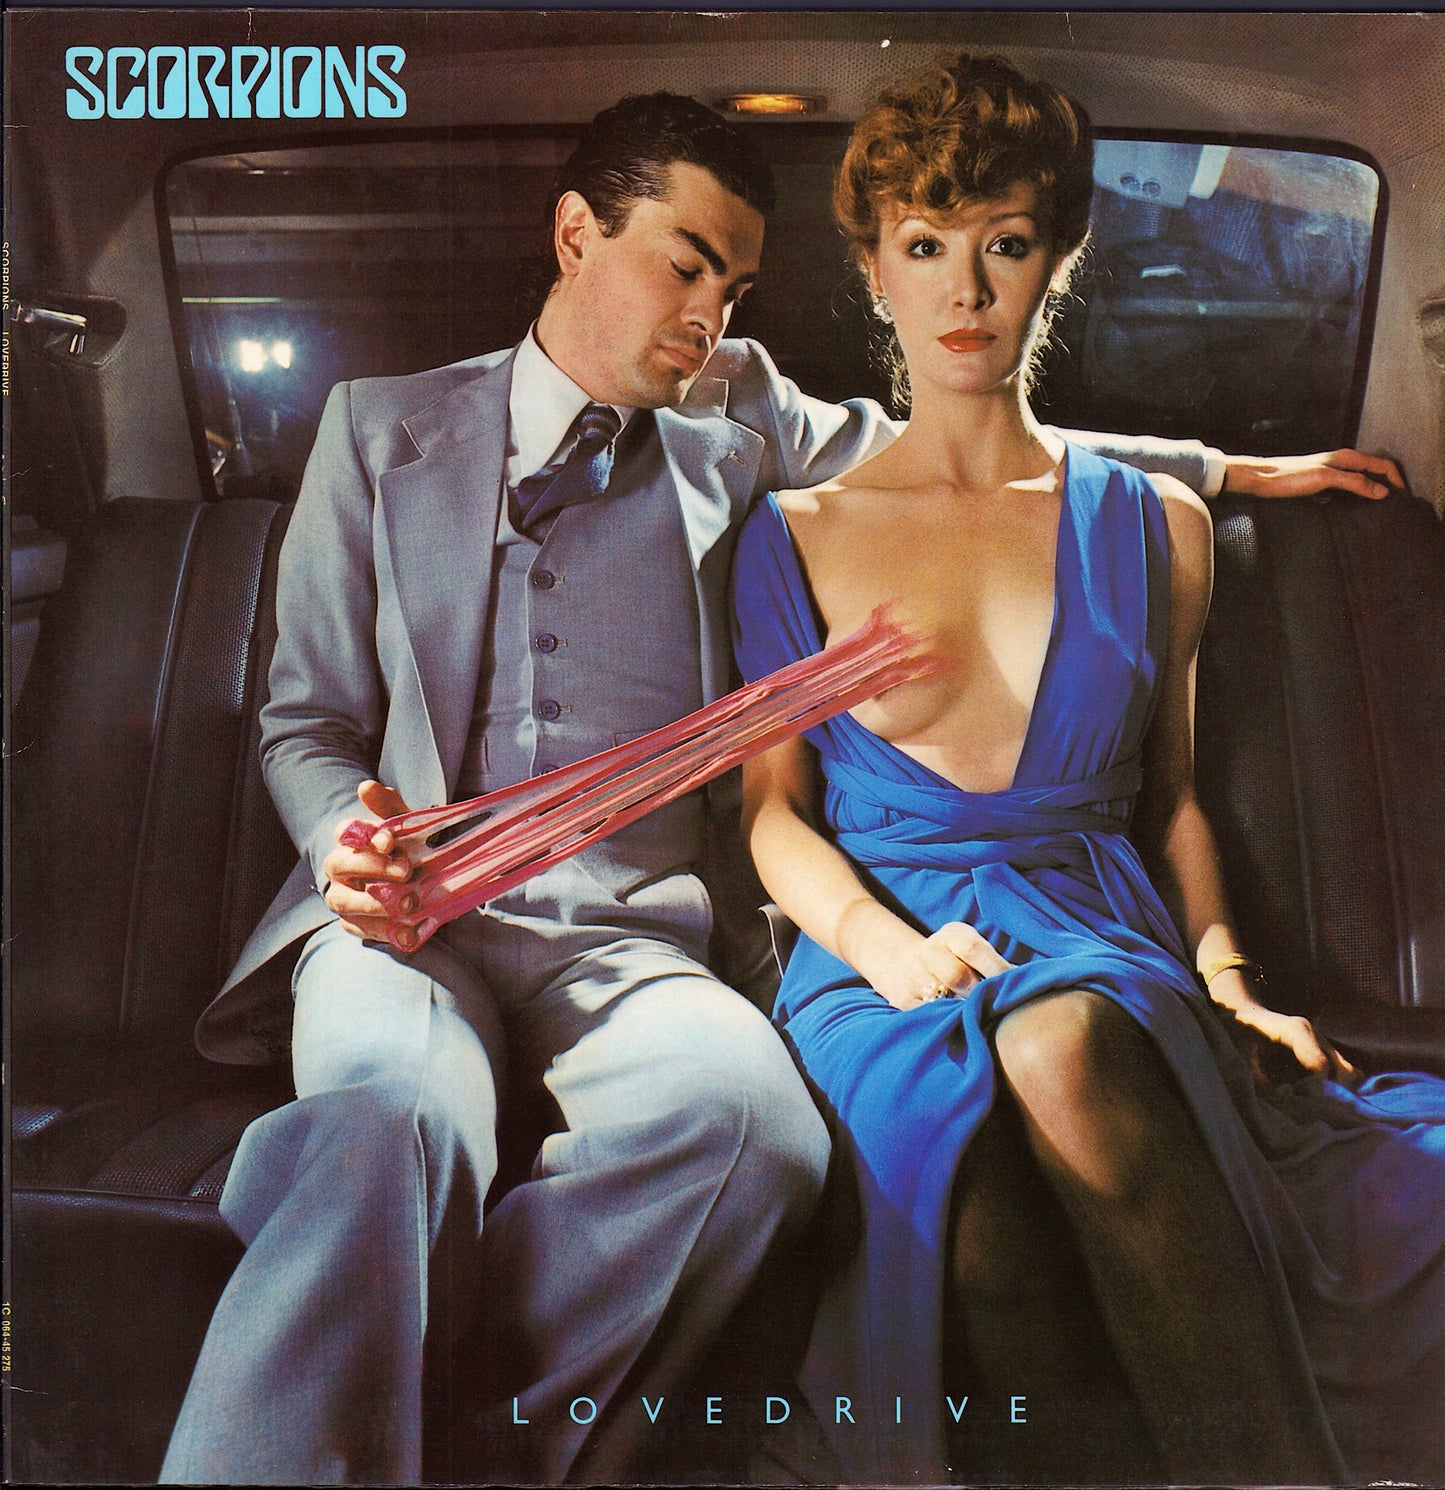 Scorpions - Lovedrive Vinyl LP